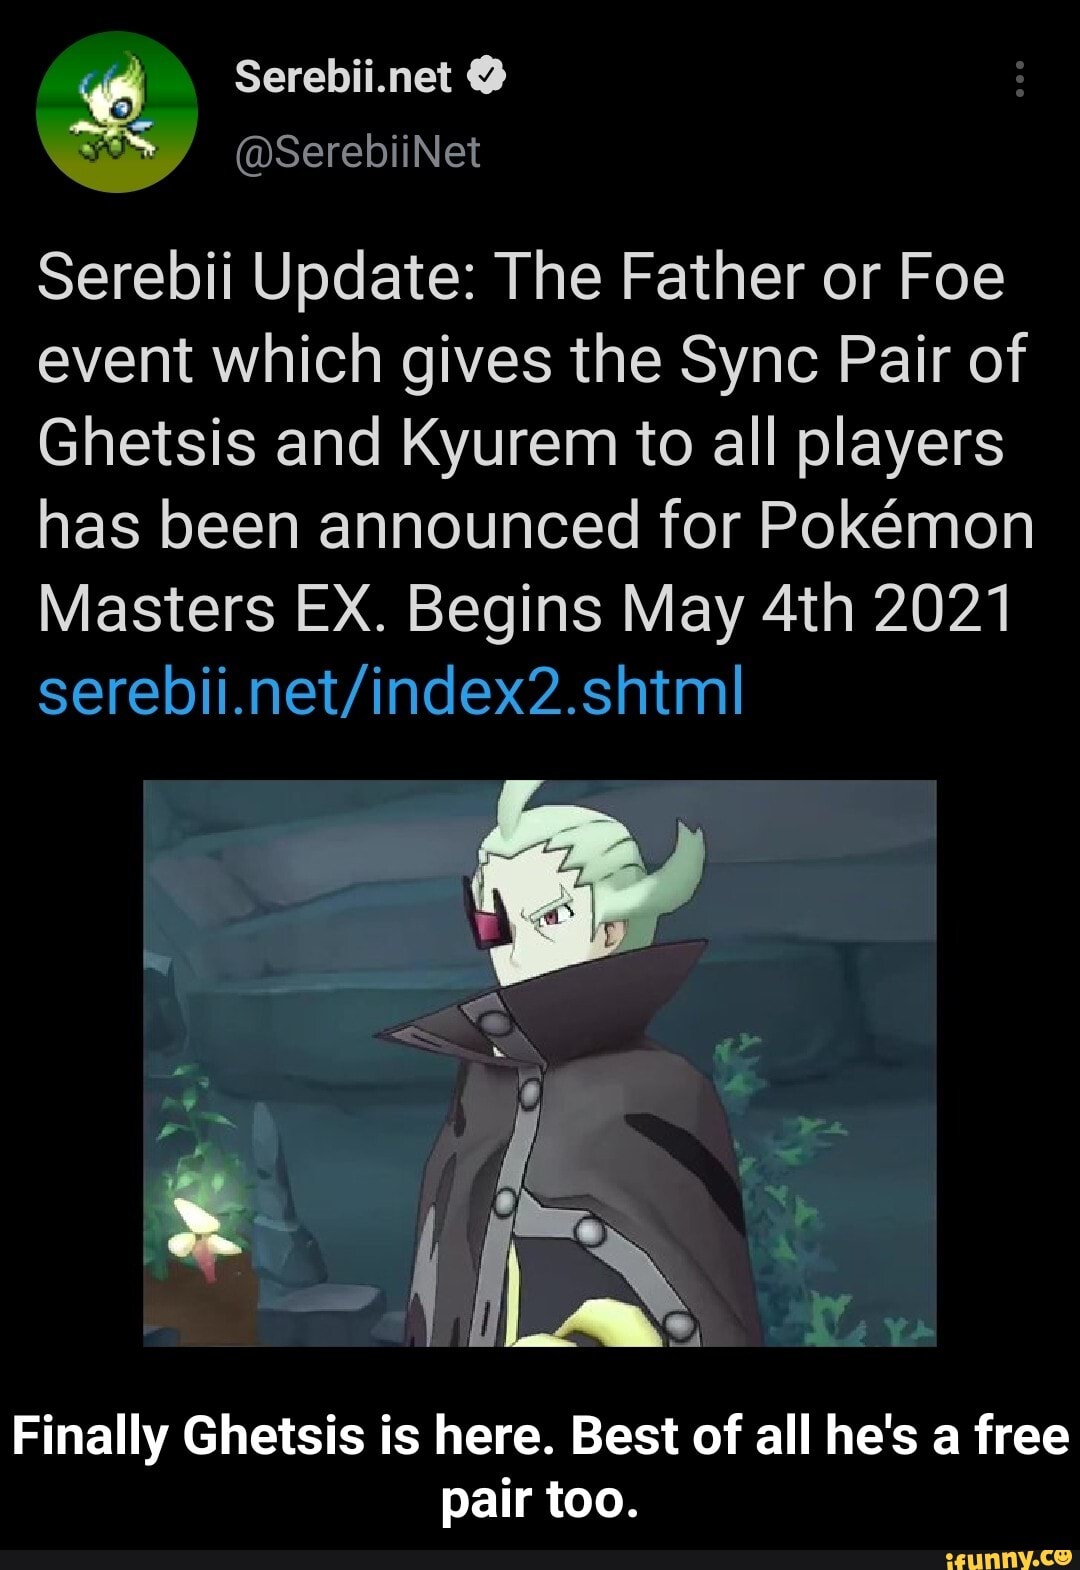 Serebii.net on X: Serebii Update: The Pokémon Masters EX Special